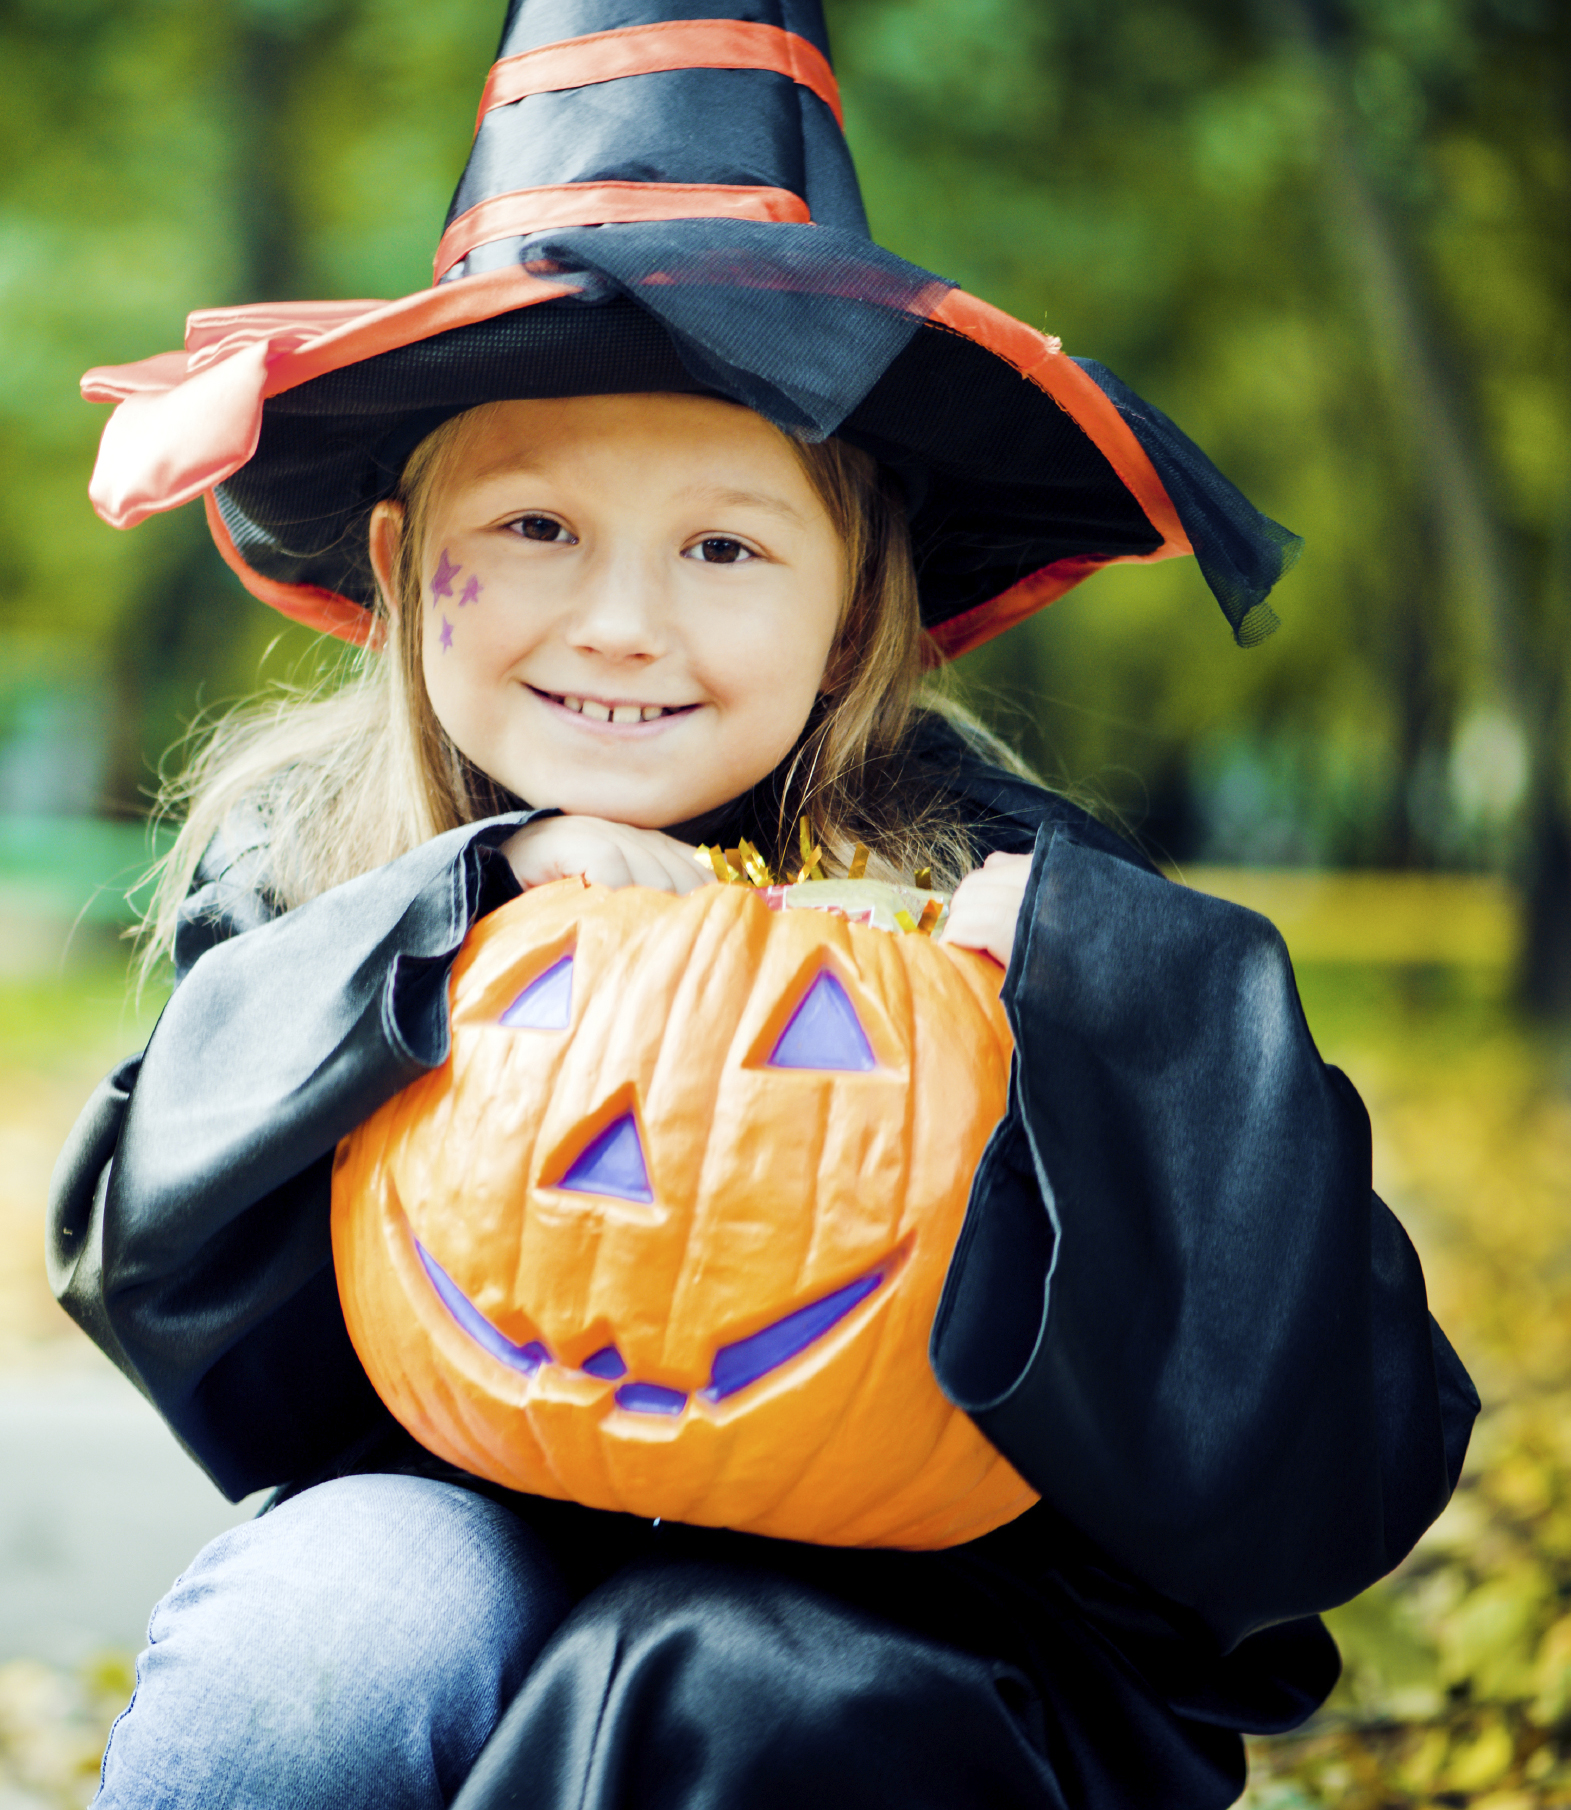 Stony Brook Doctors Say Play it Safe This Halloween | Stony Brook ...